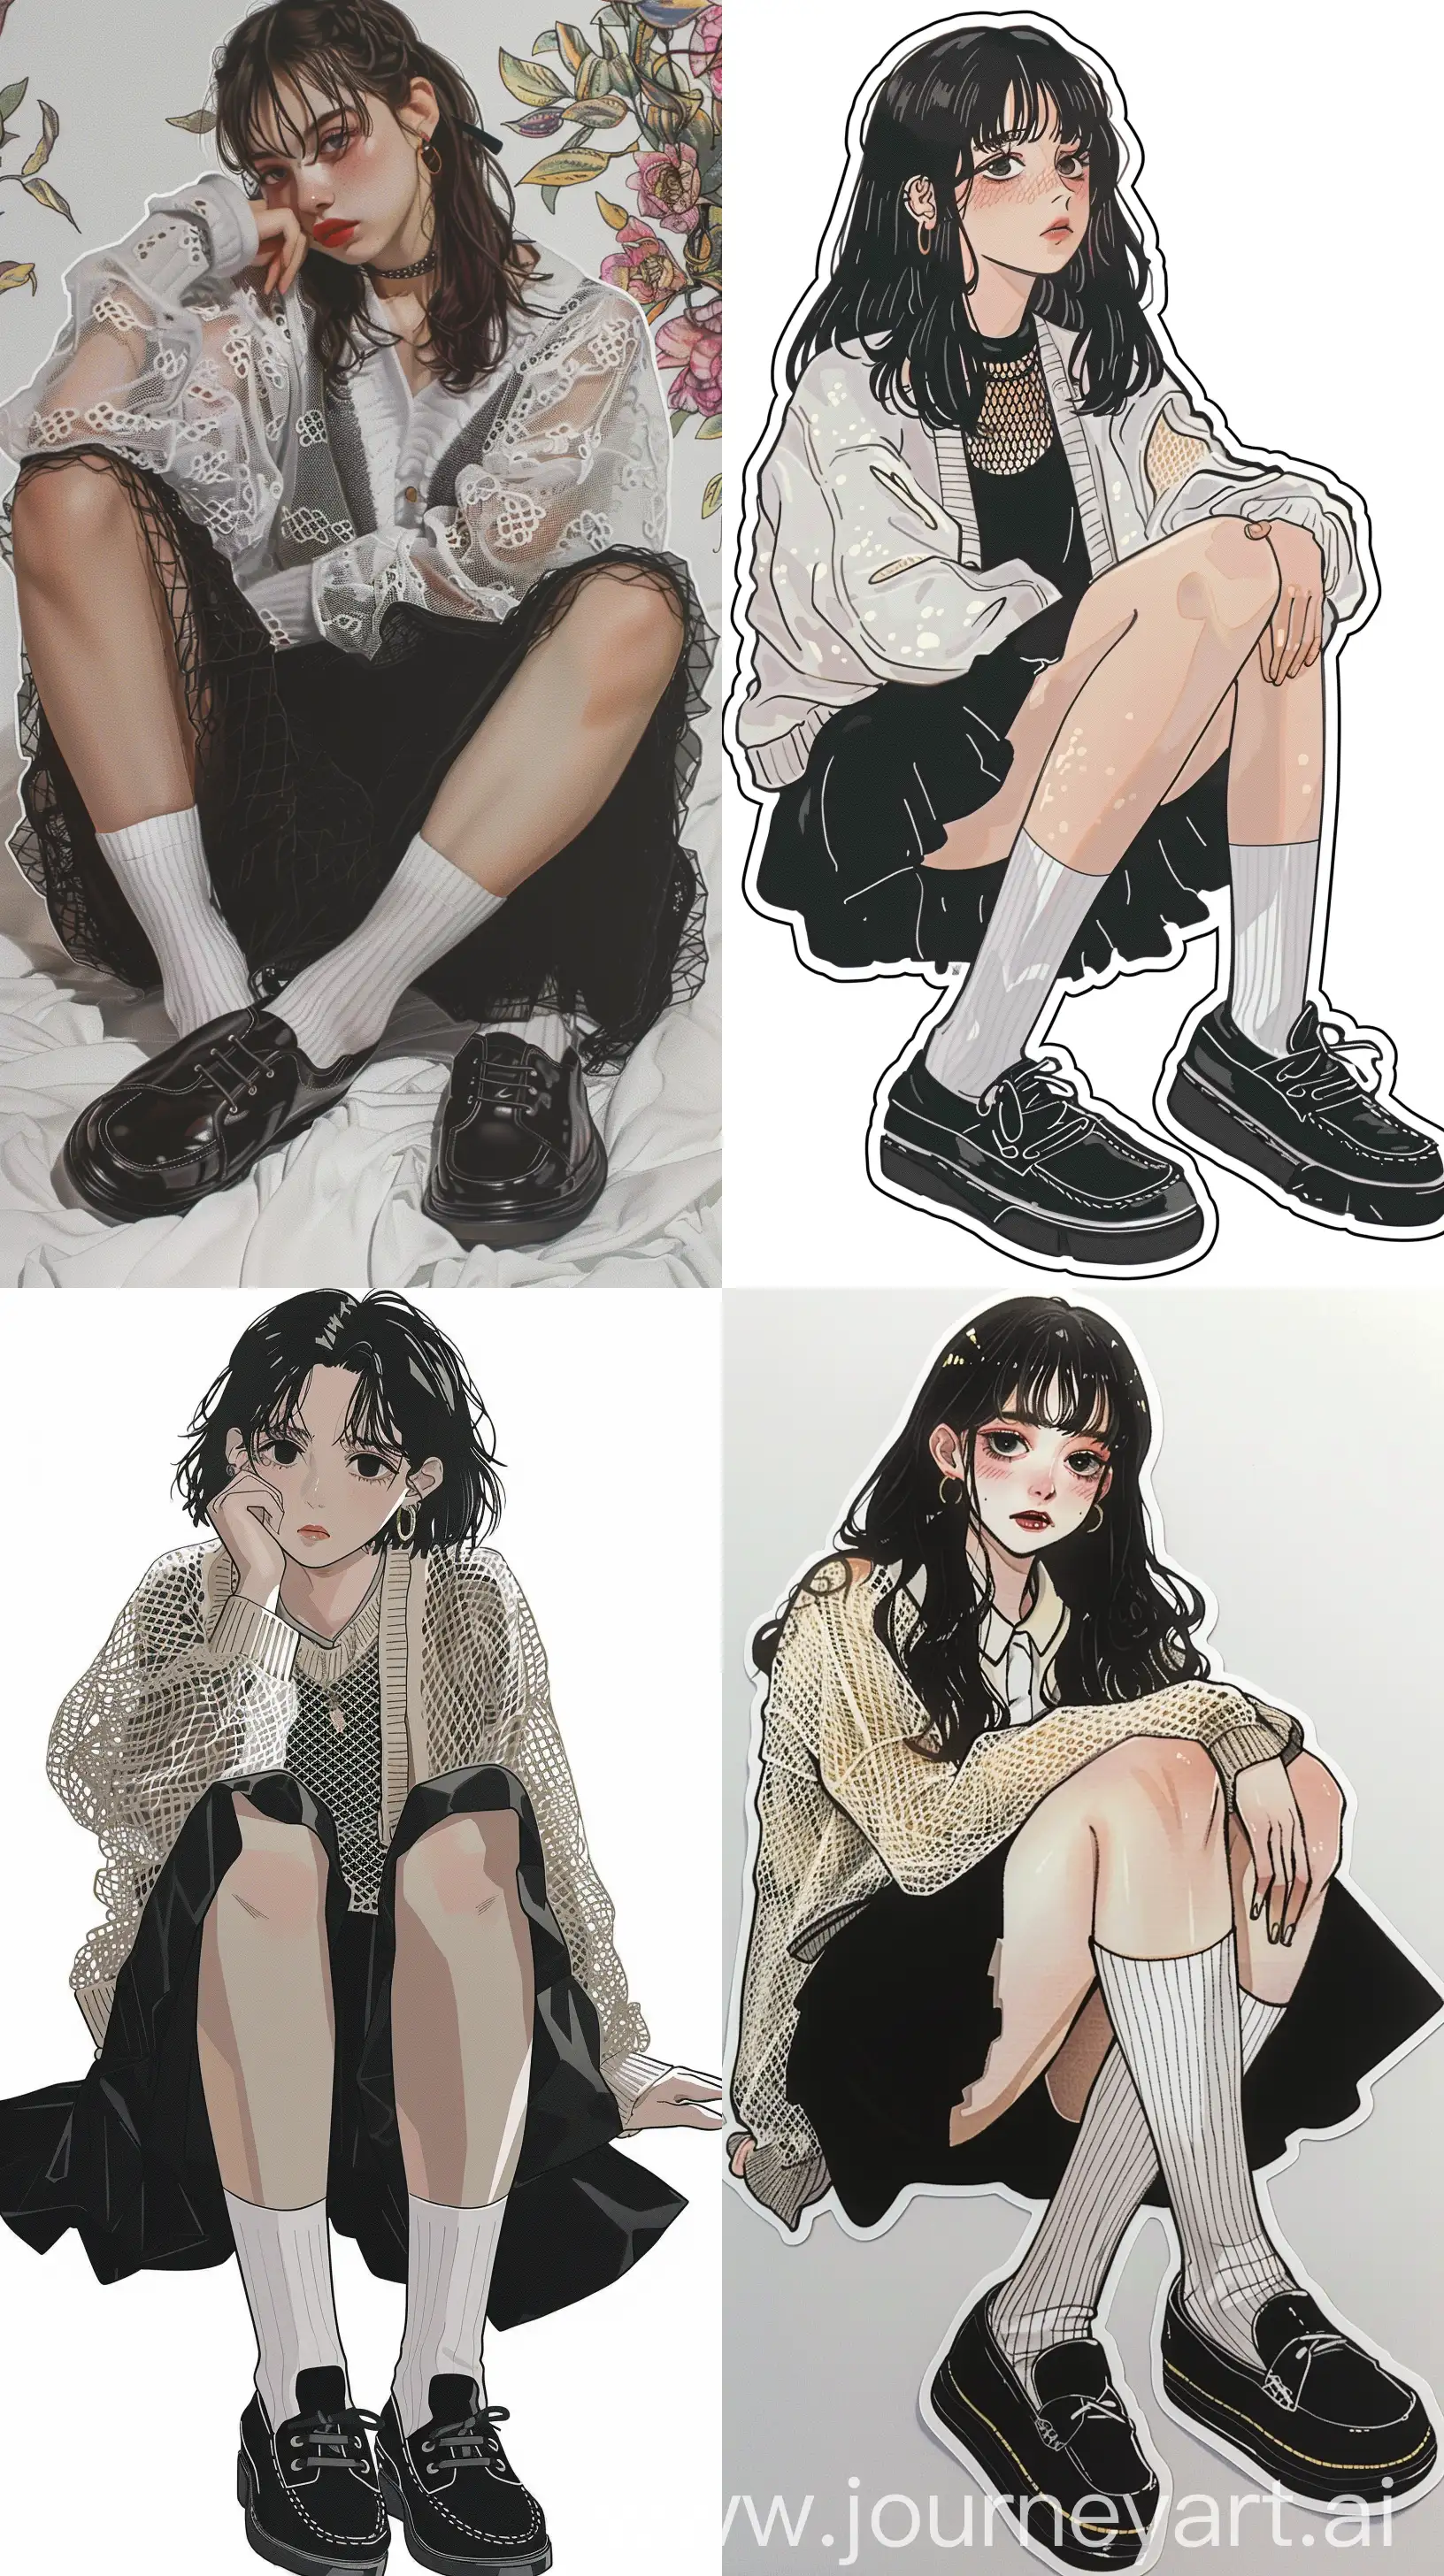 Y2K-Anime-Girl-in-Net-Cardigan-and-Black-Skirt-Sitting-in-Design-Pose